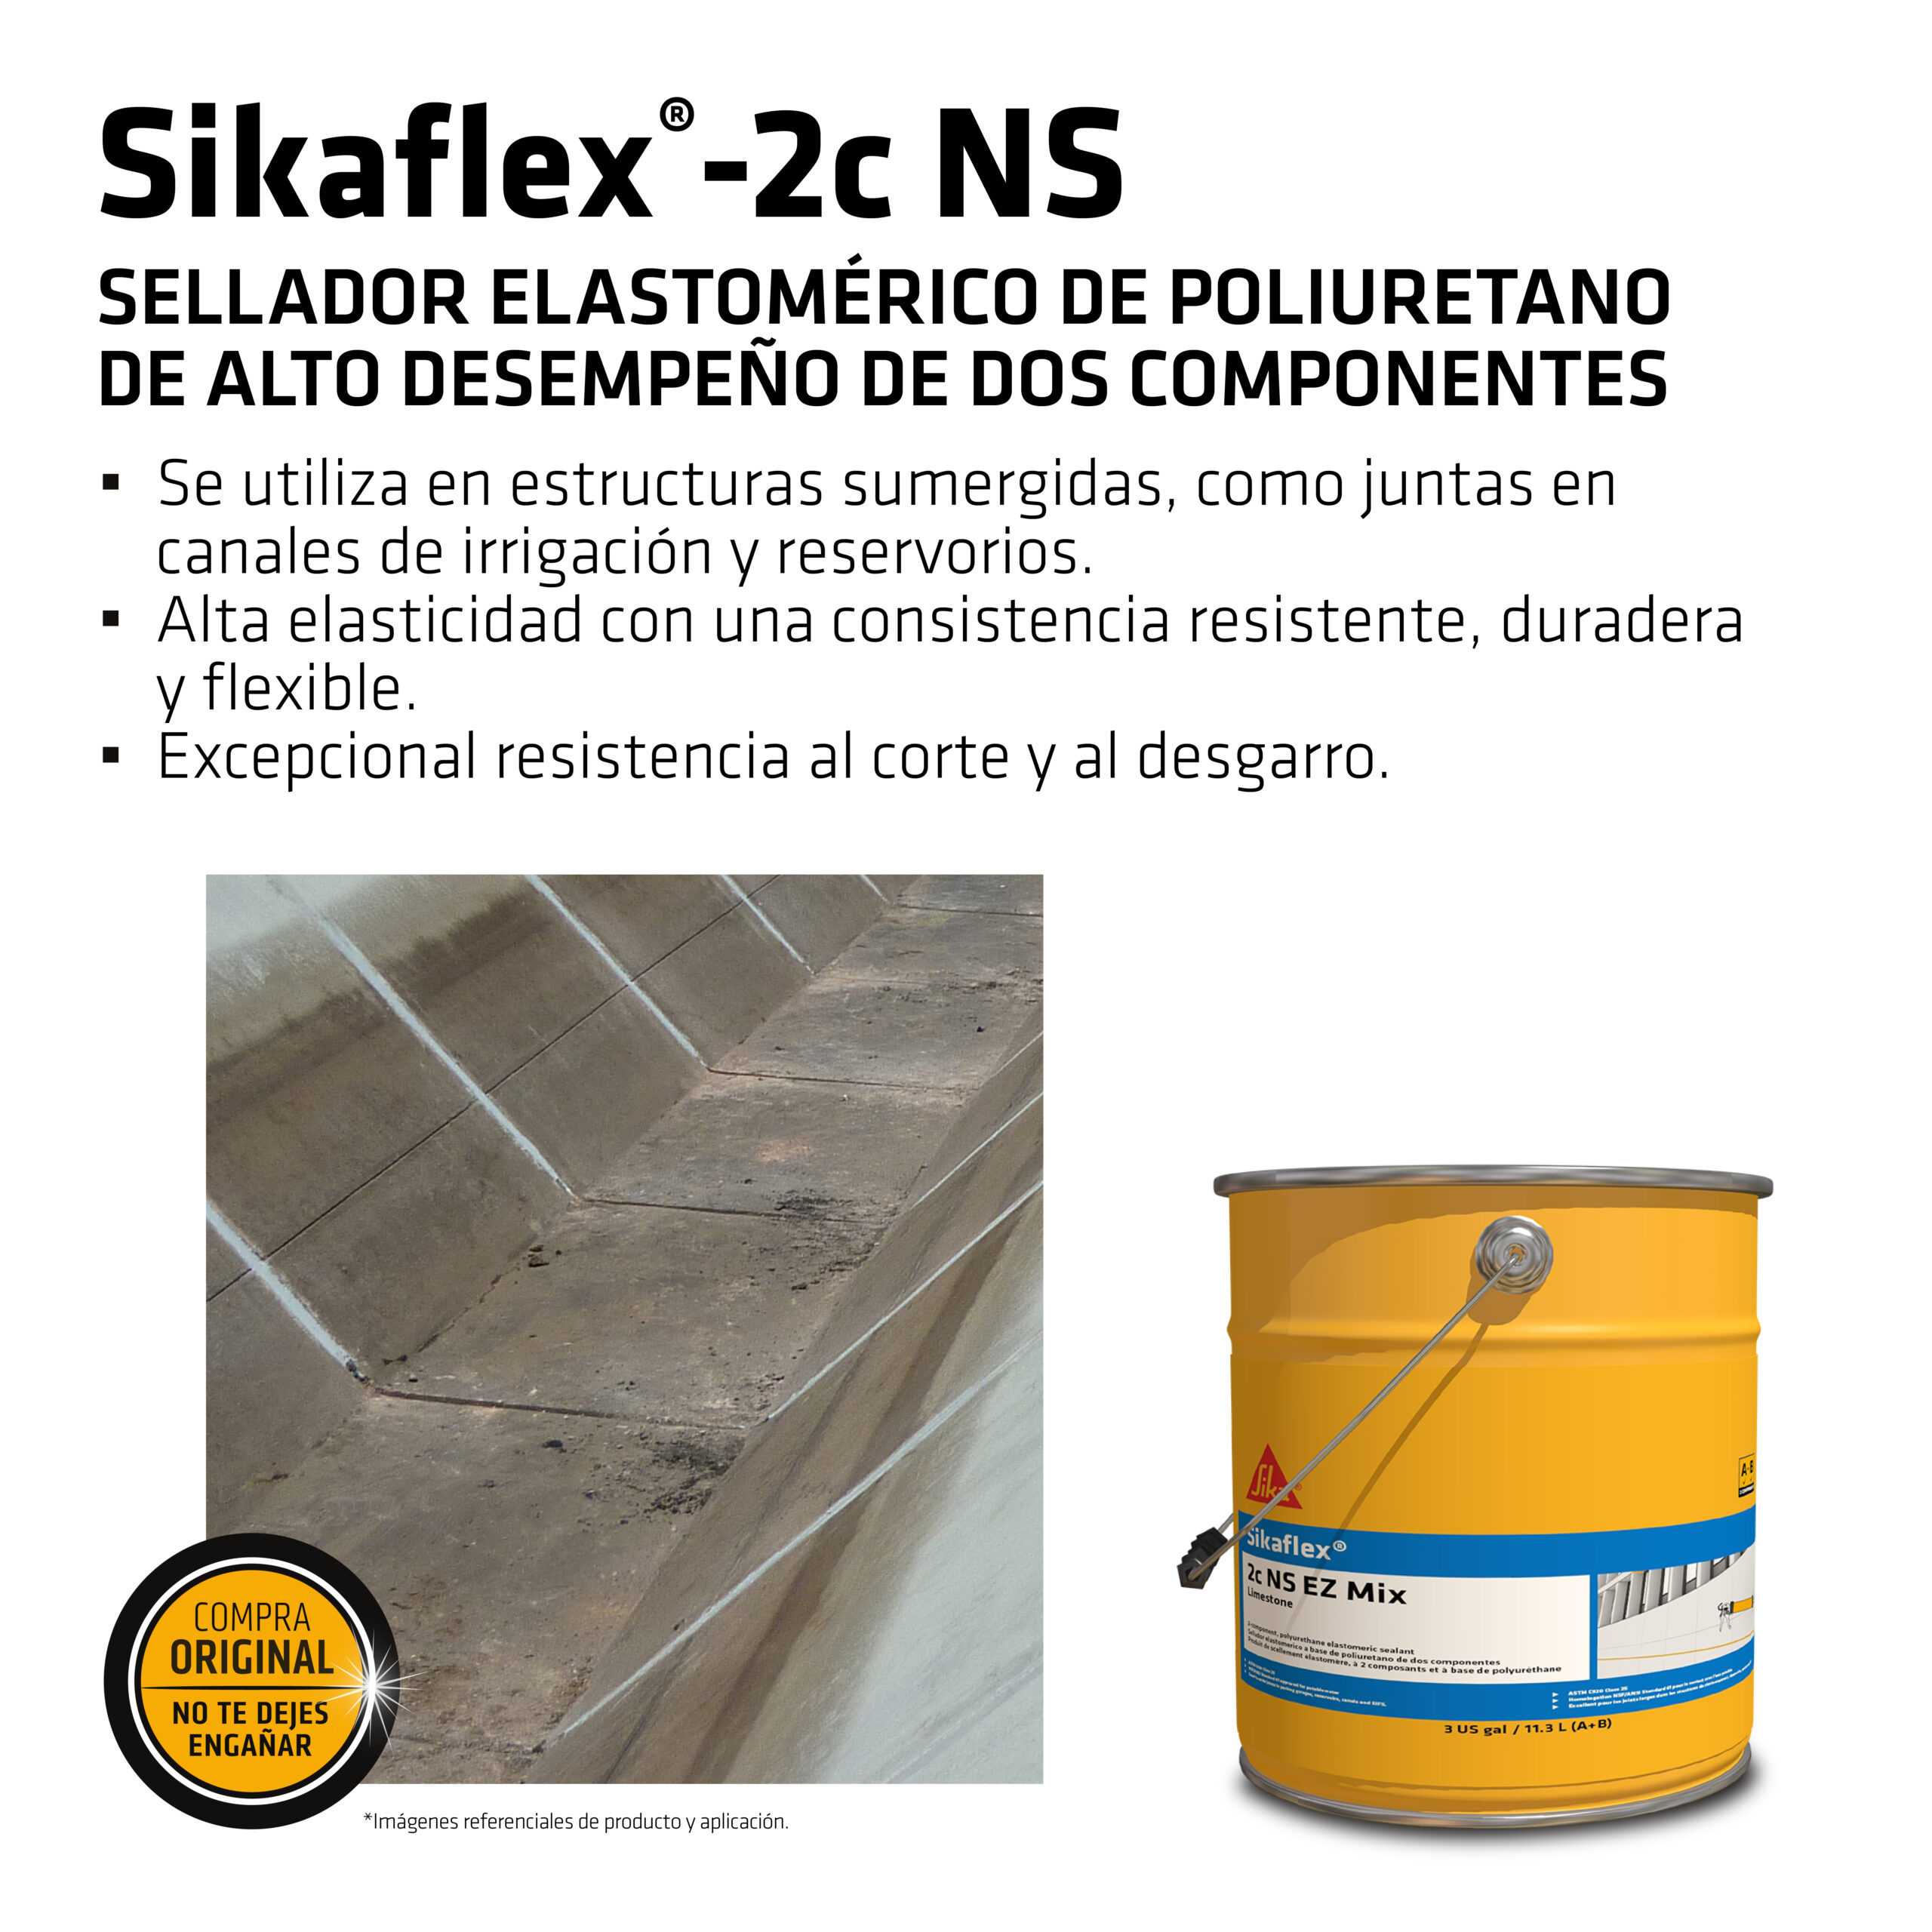 Sikaflex®-2c NS